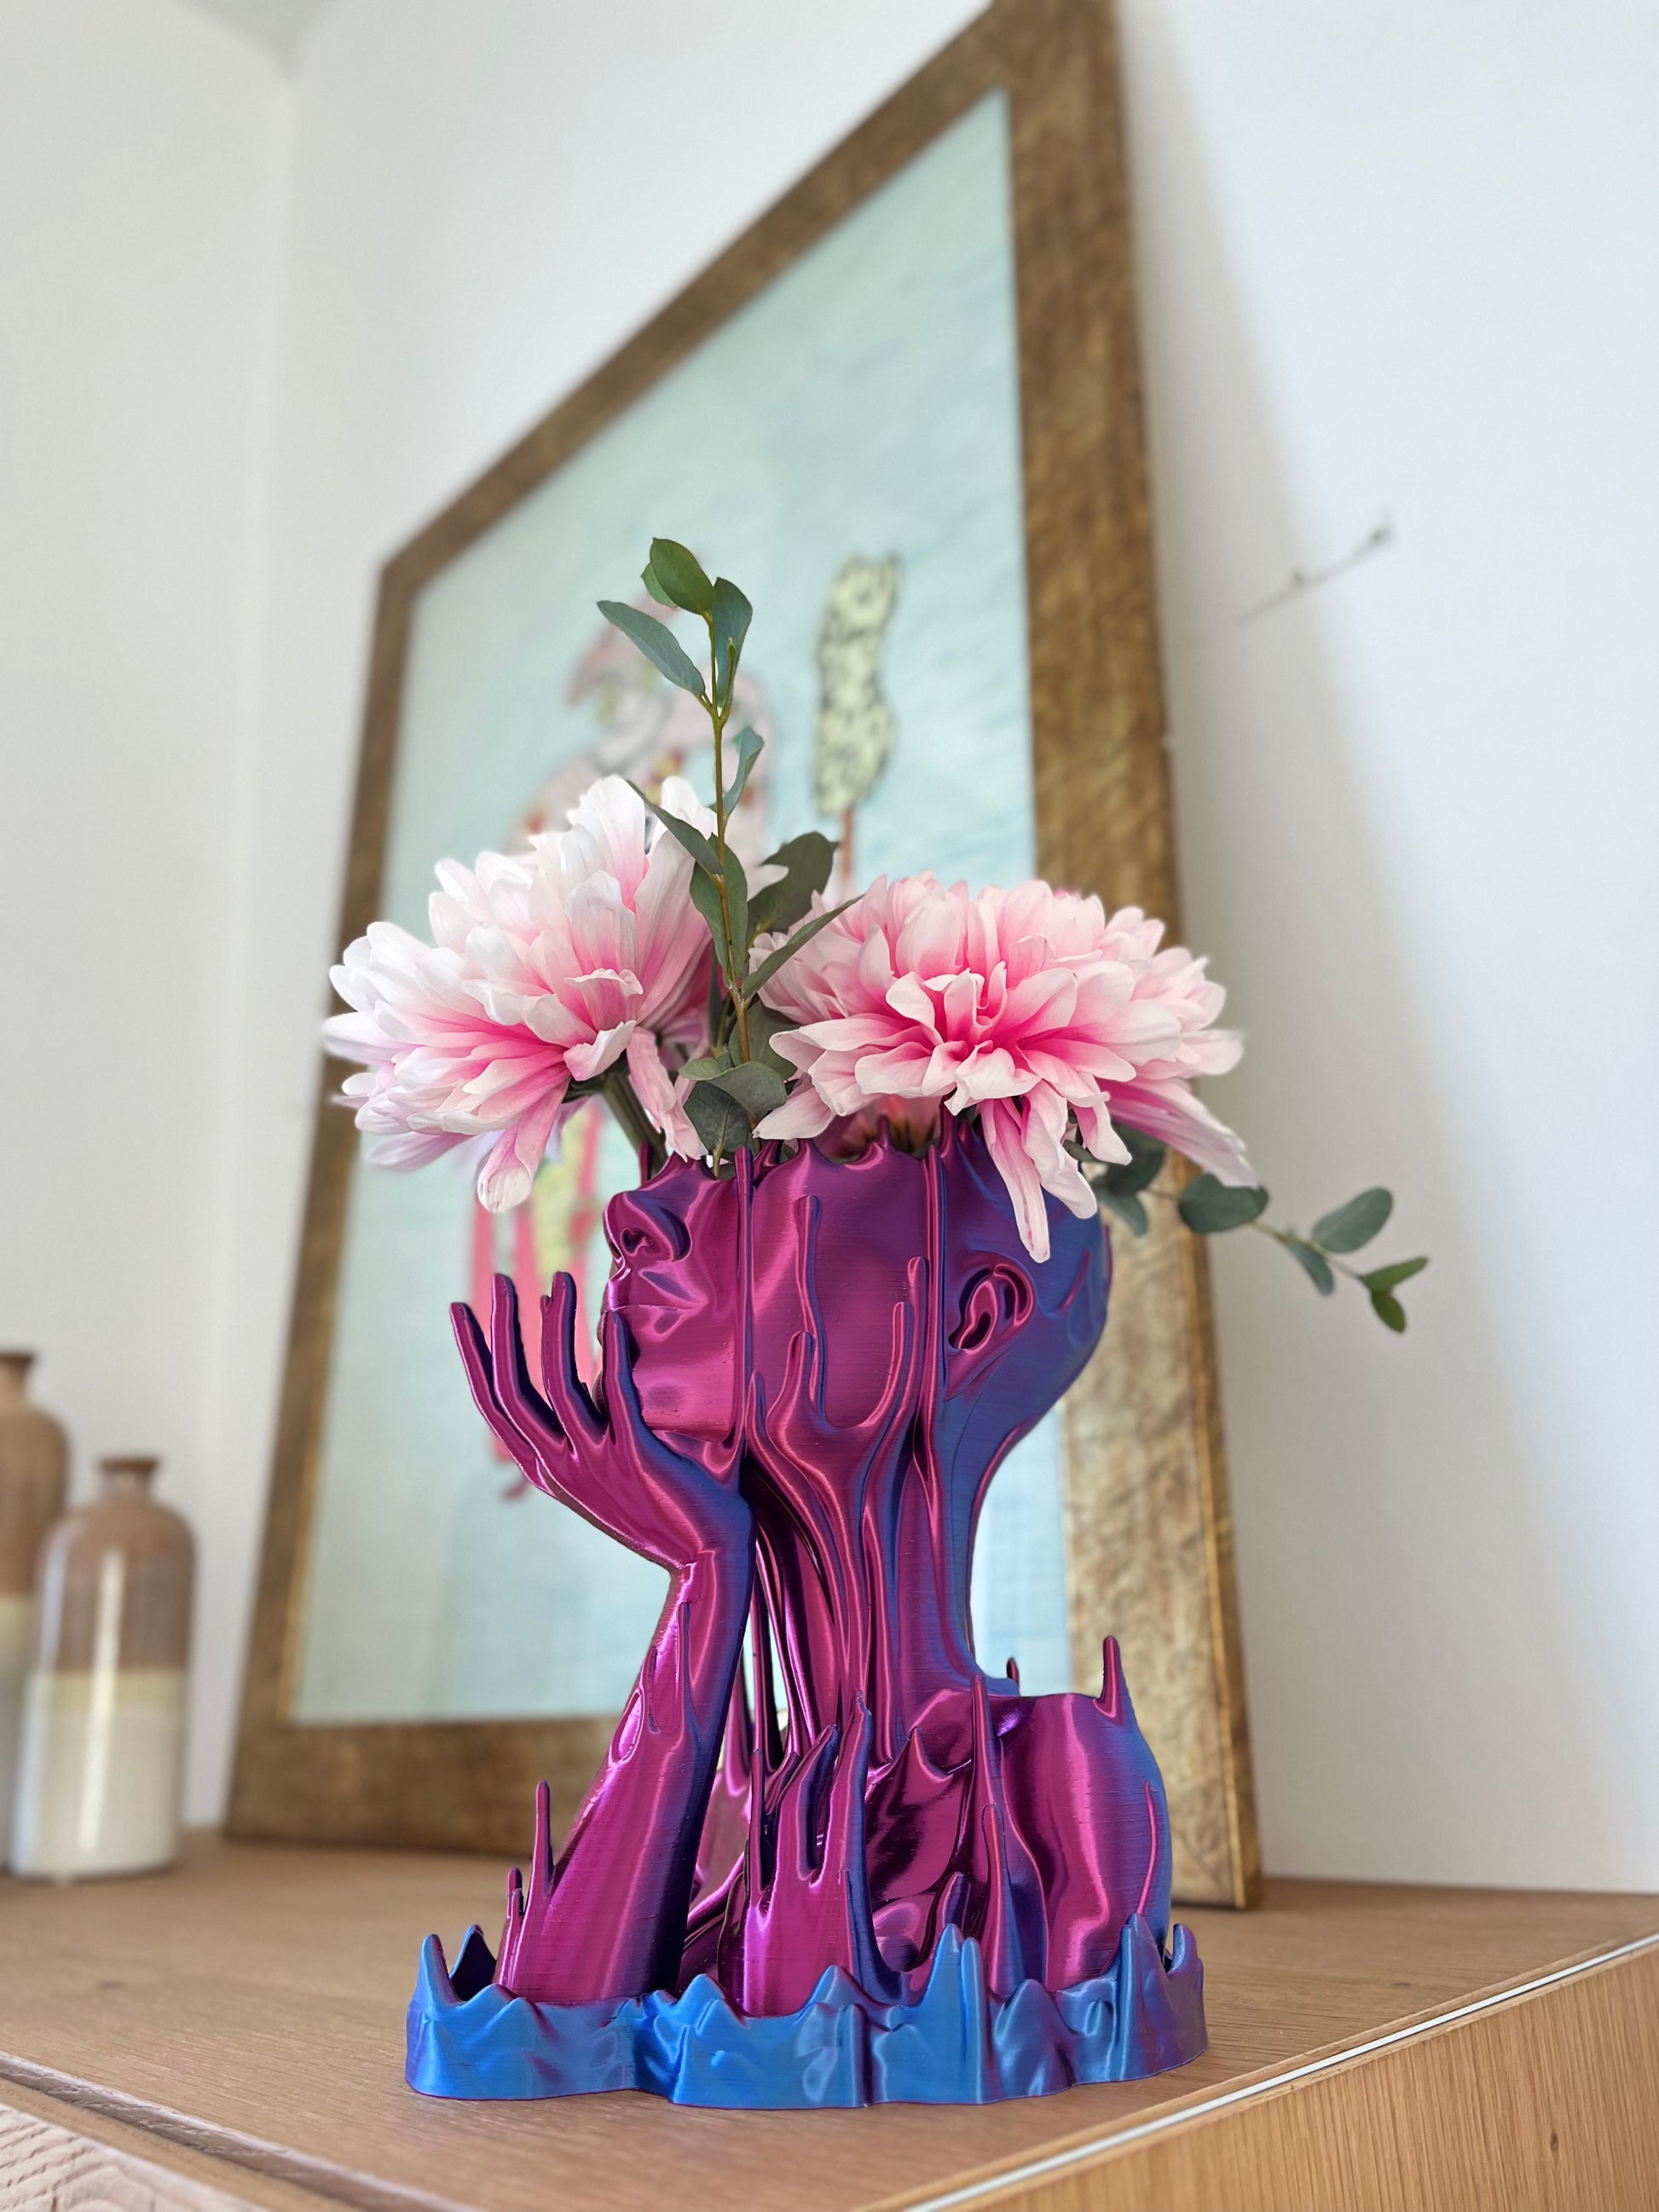 pla bioplastic 3D print eco friendly home decoration vases flowers 